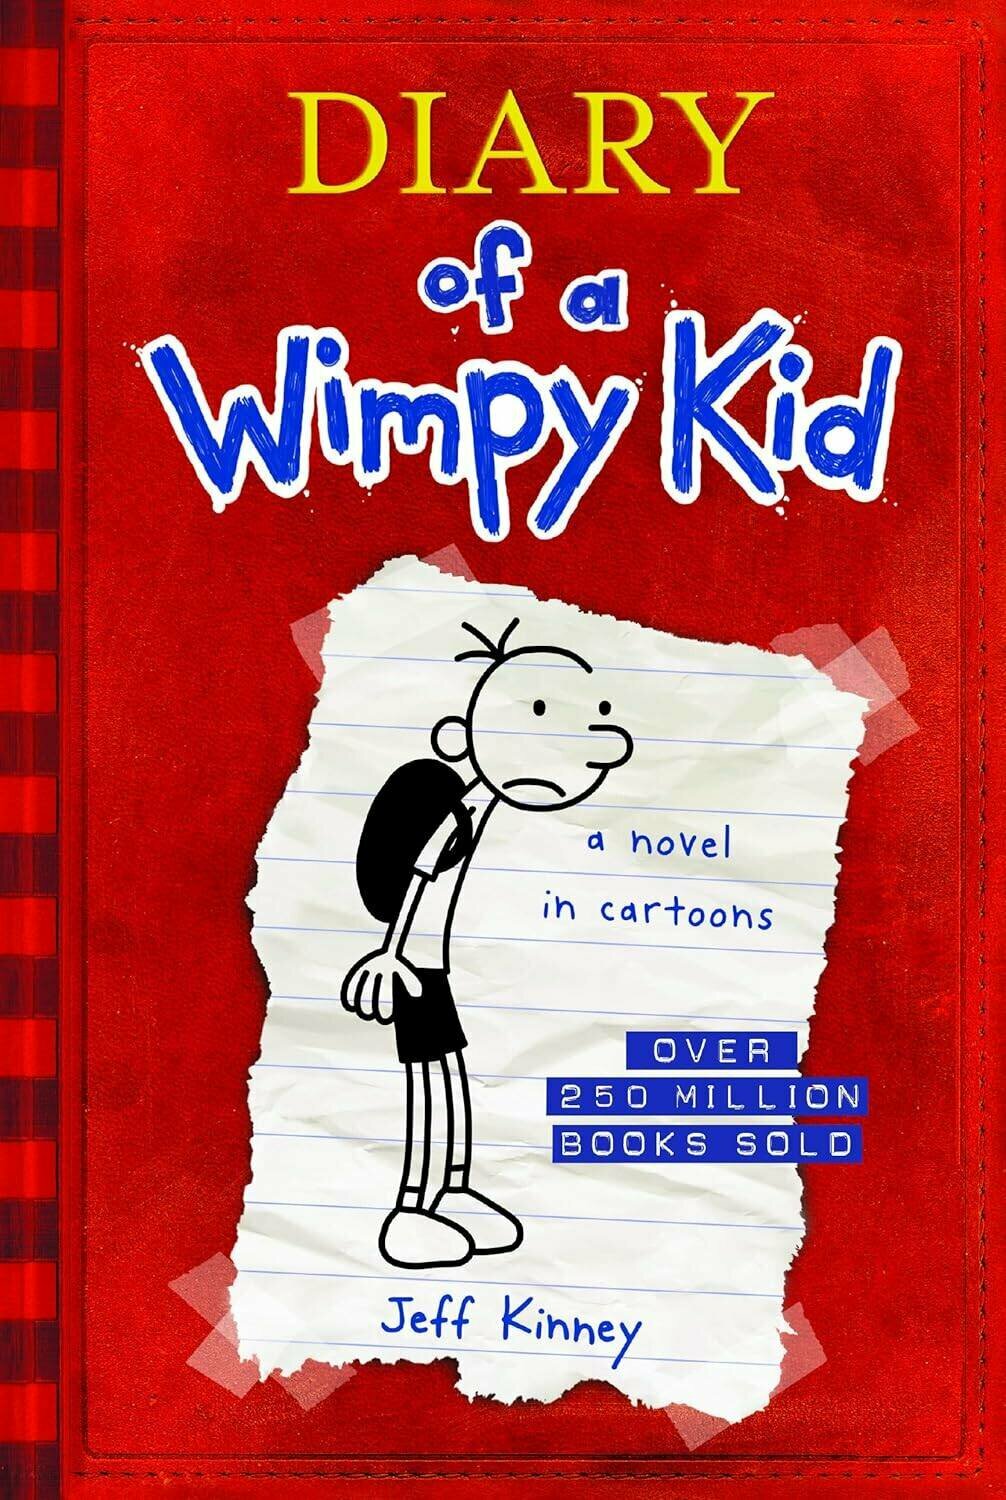 Jeff Kinney. Diary of a wimpy kid (Jeff Kinney) Дневник слабака (Джефф Кинни) /Книги на английском языке